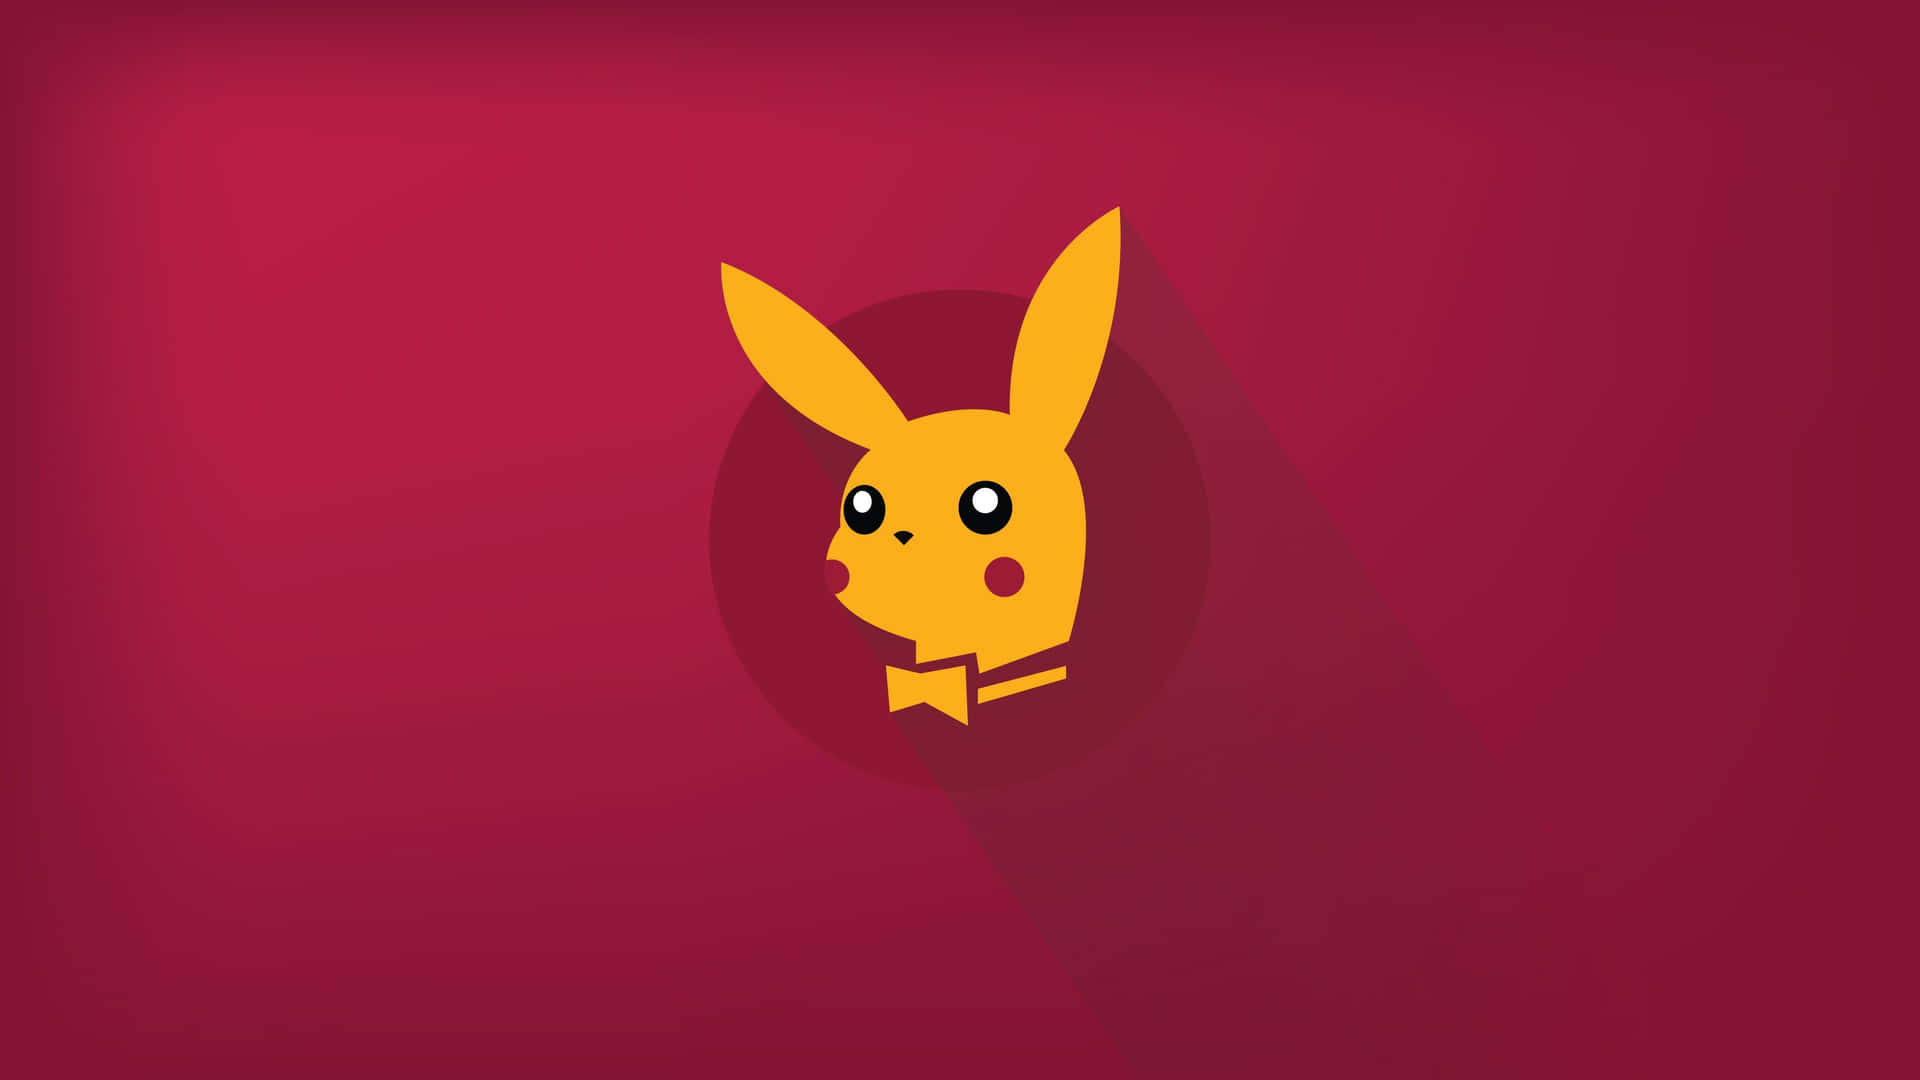 A yellow pokemon with an orange background - Pikachu